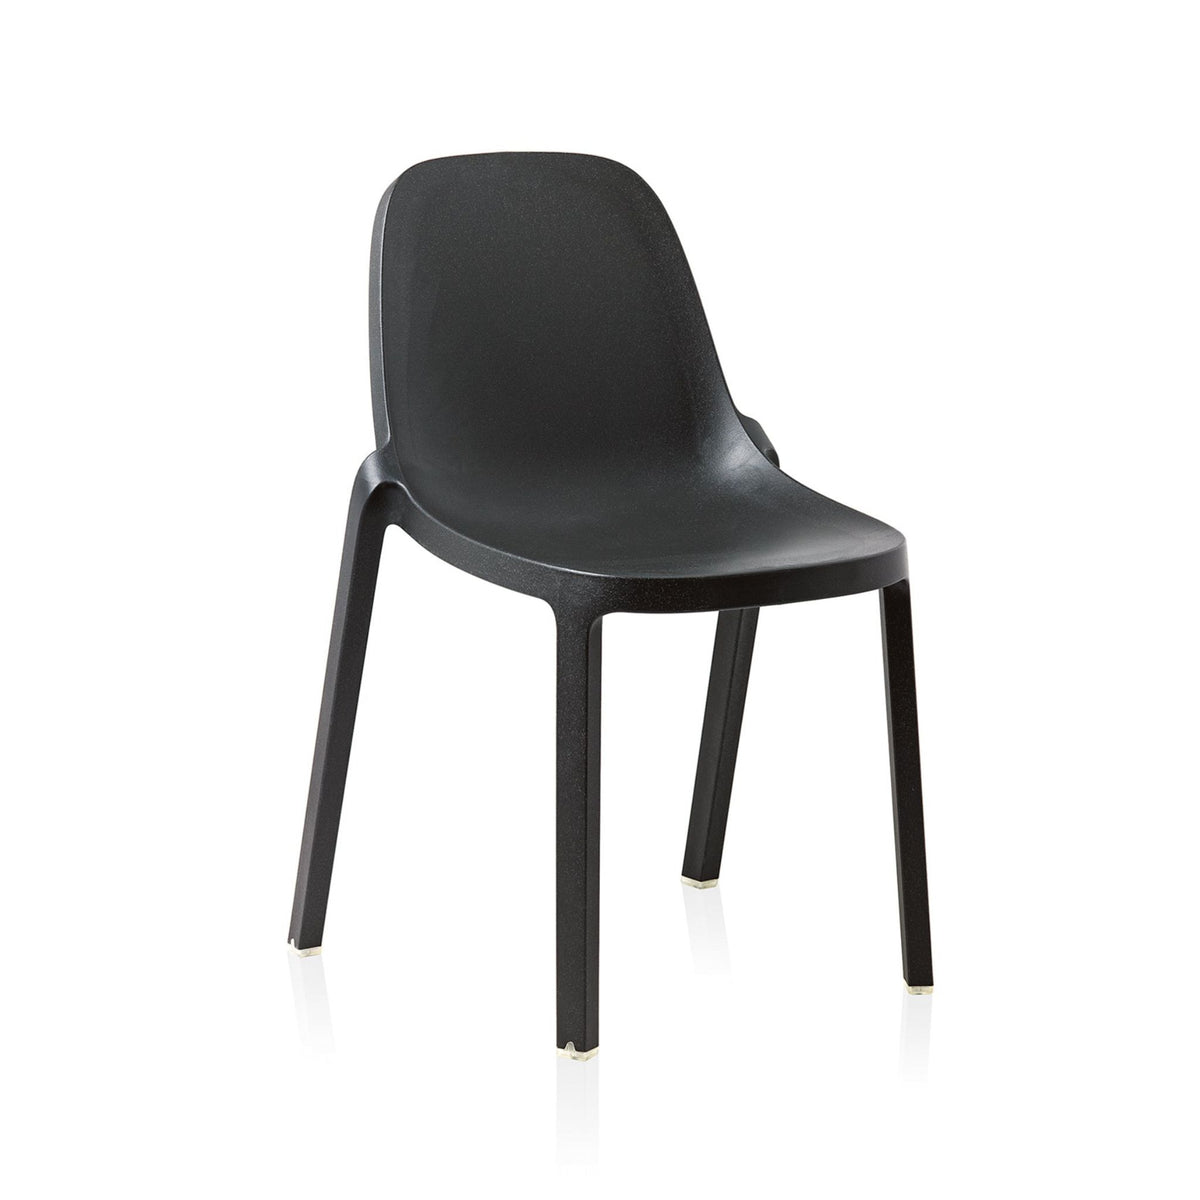 Emeco Broom Chair Dark Grey